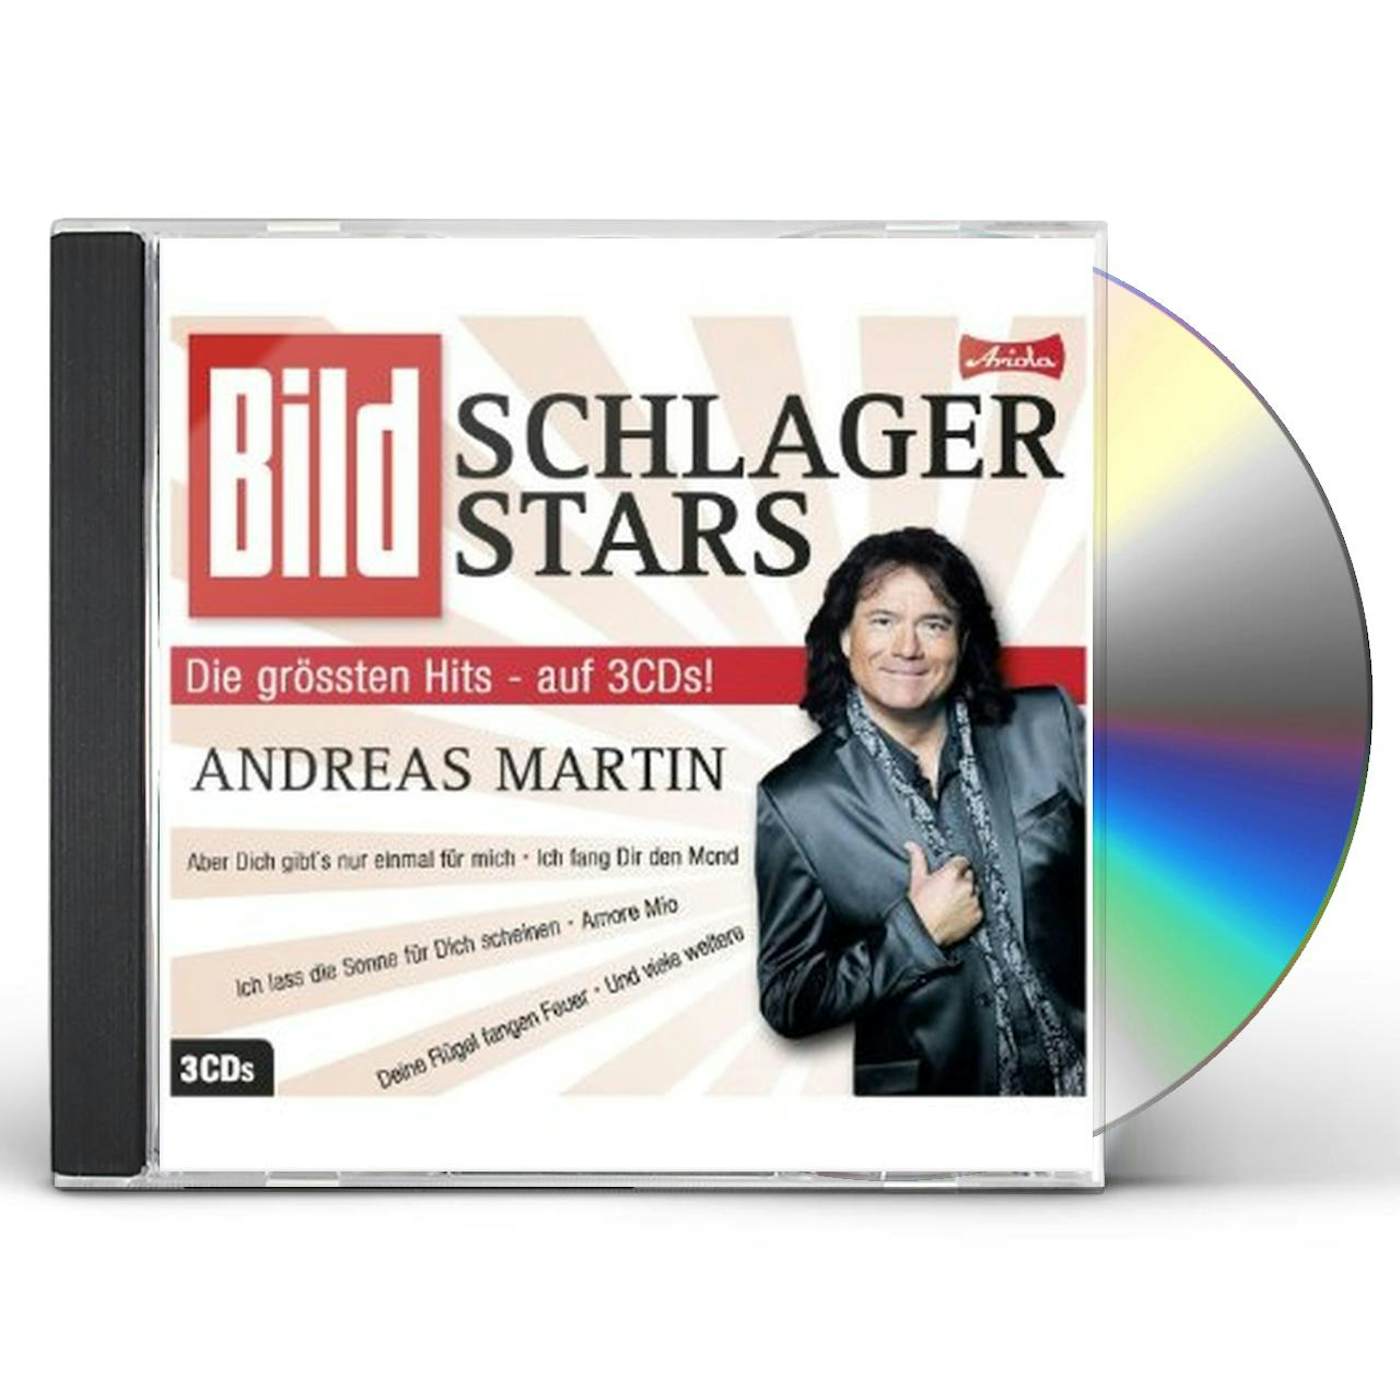 Andreas Martin BILD SCHLAGER STARS CD